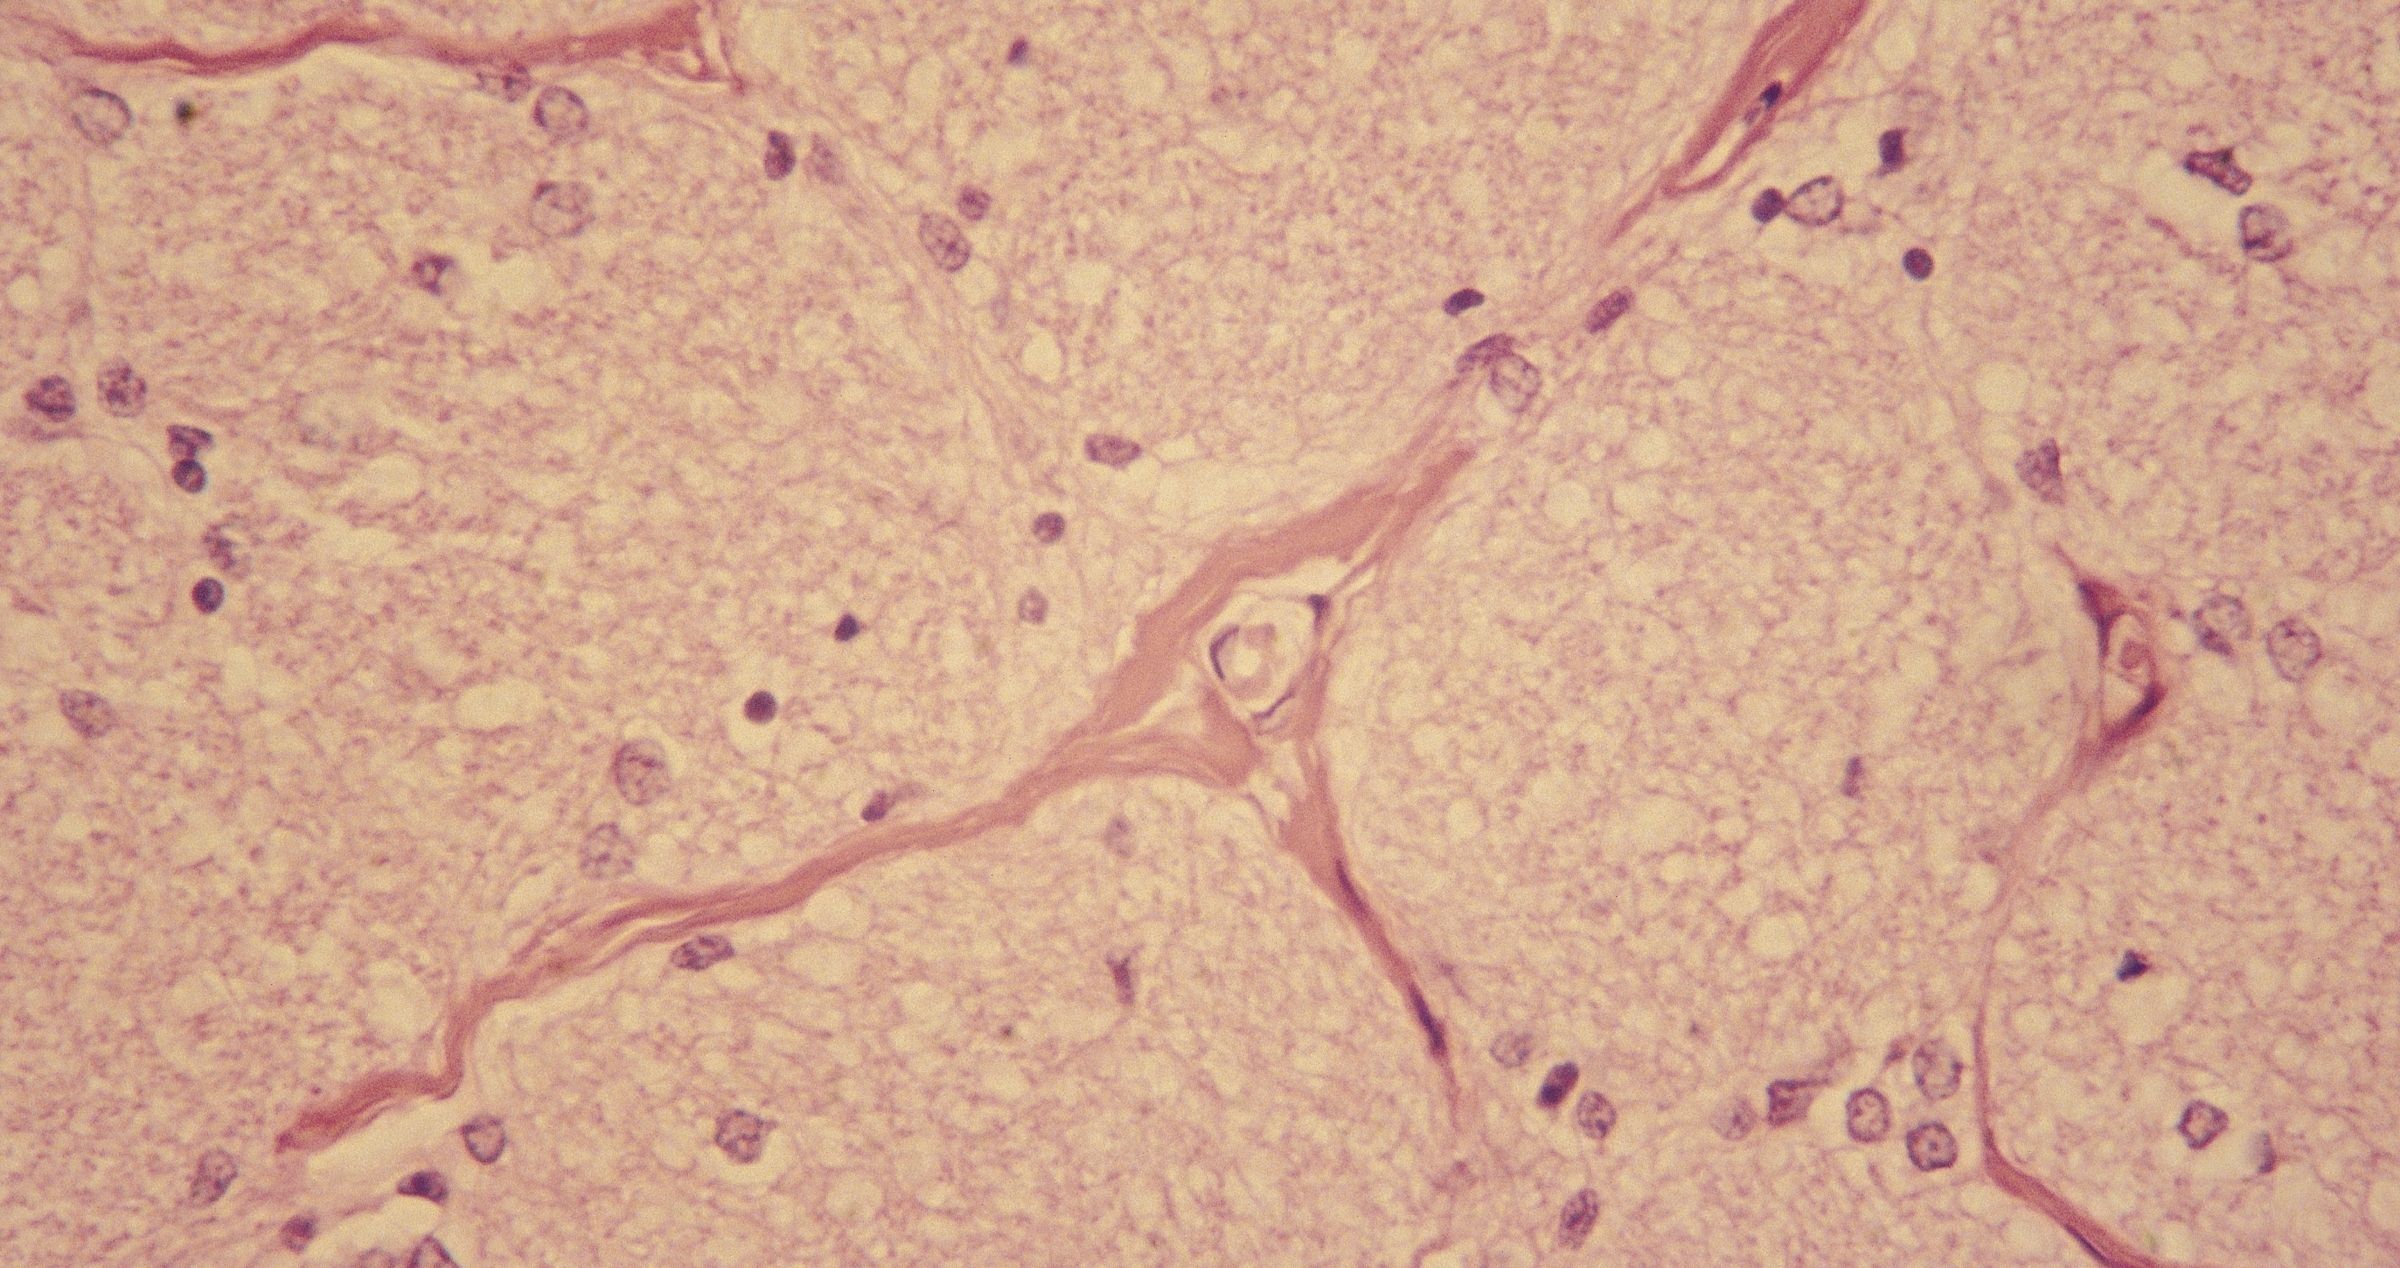 Microscopic image of moisture cells